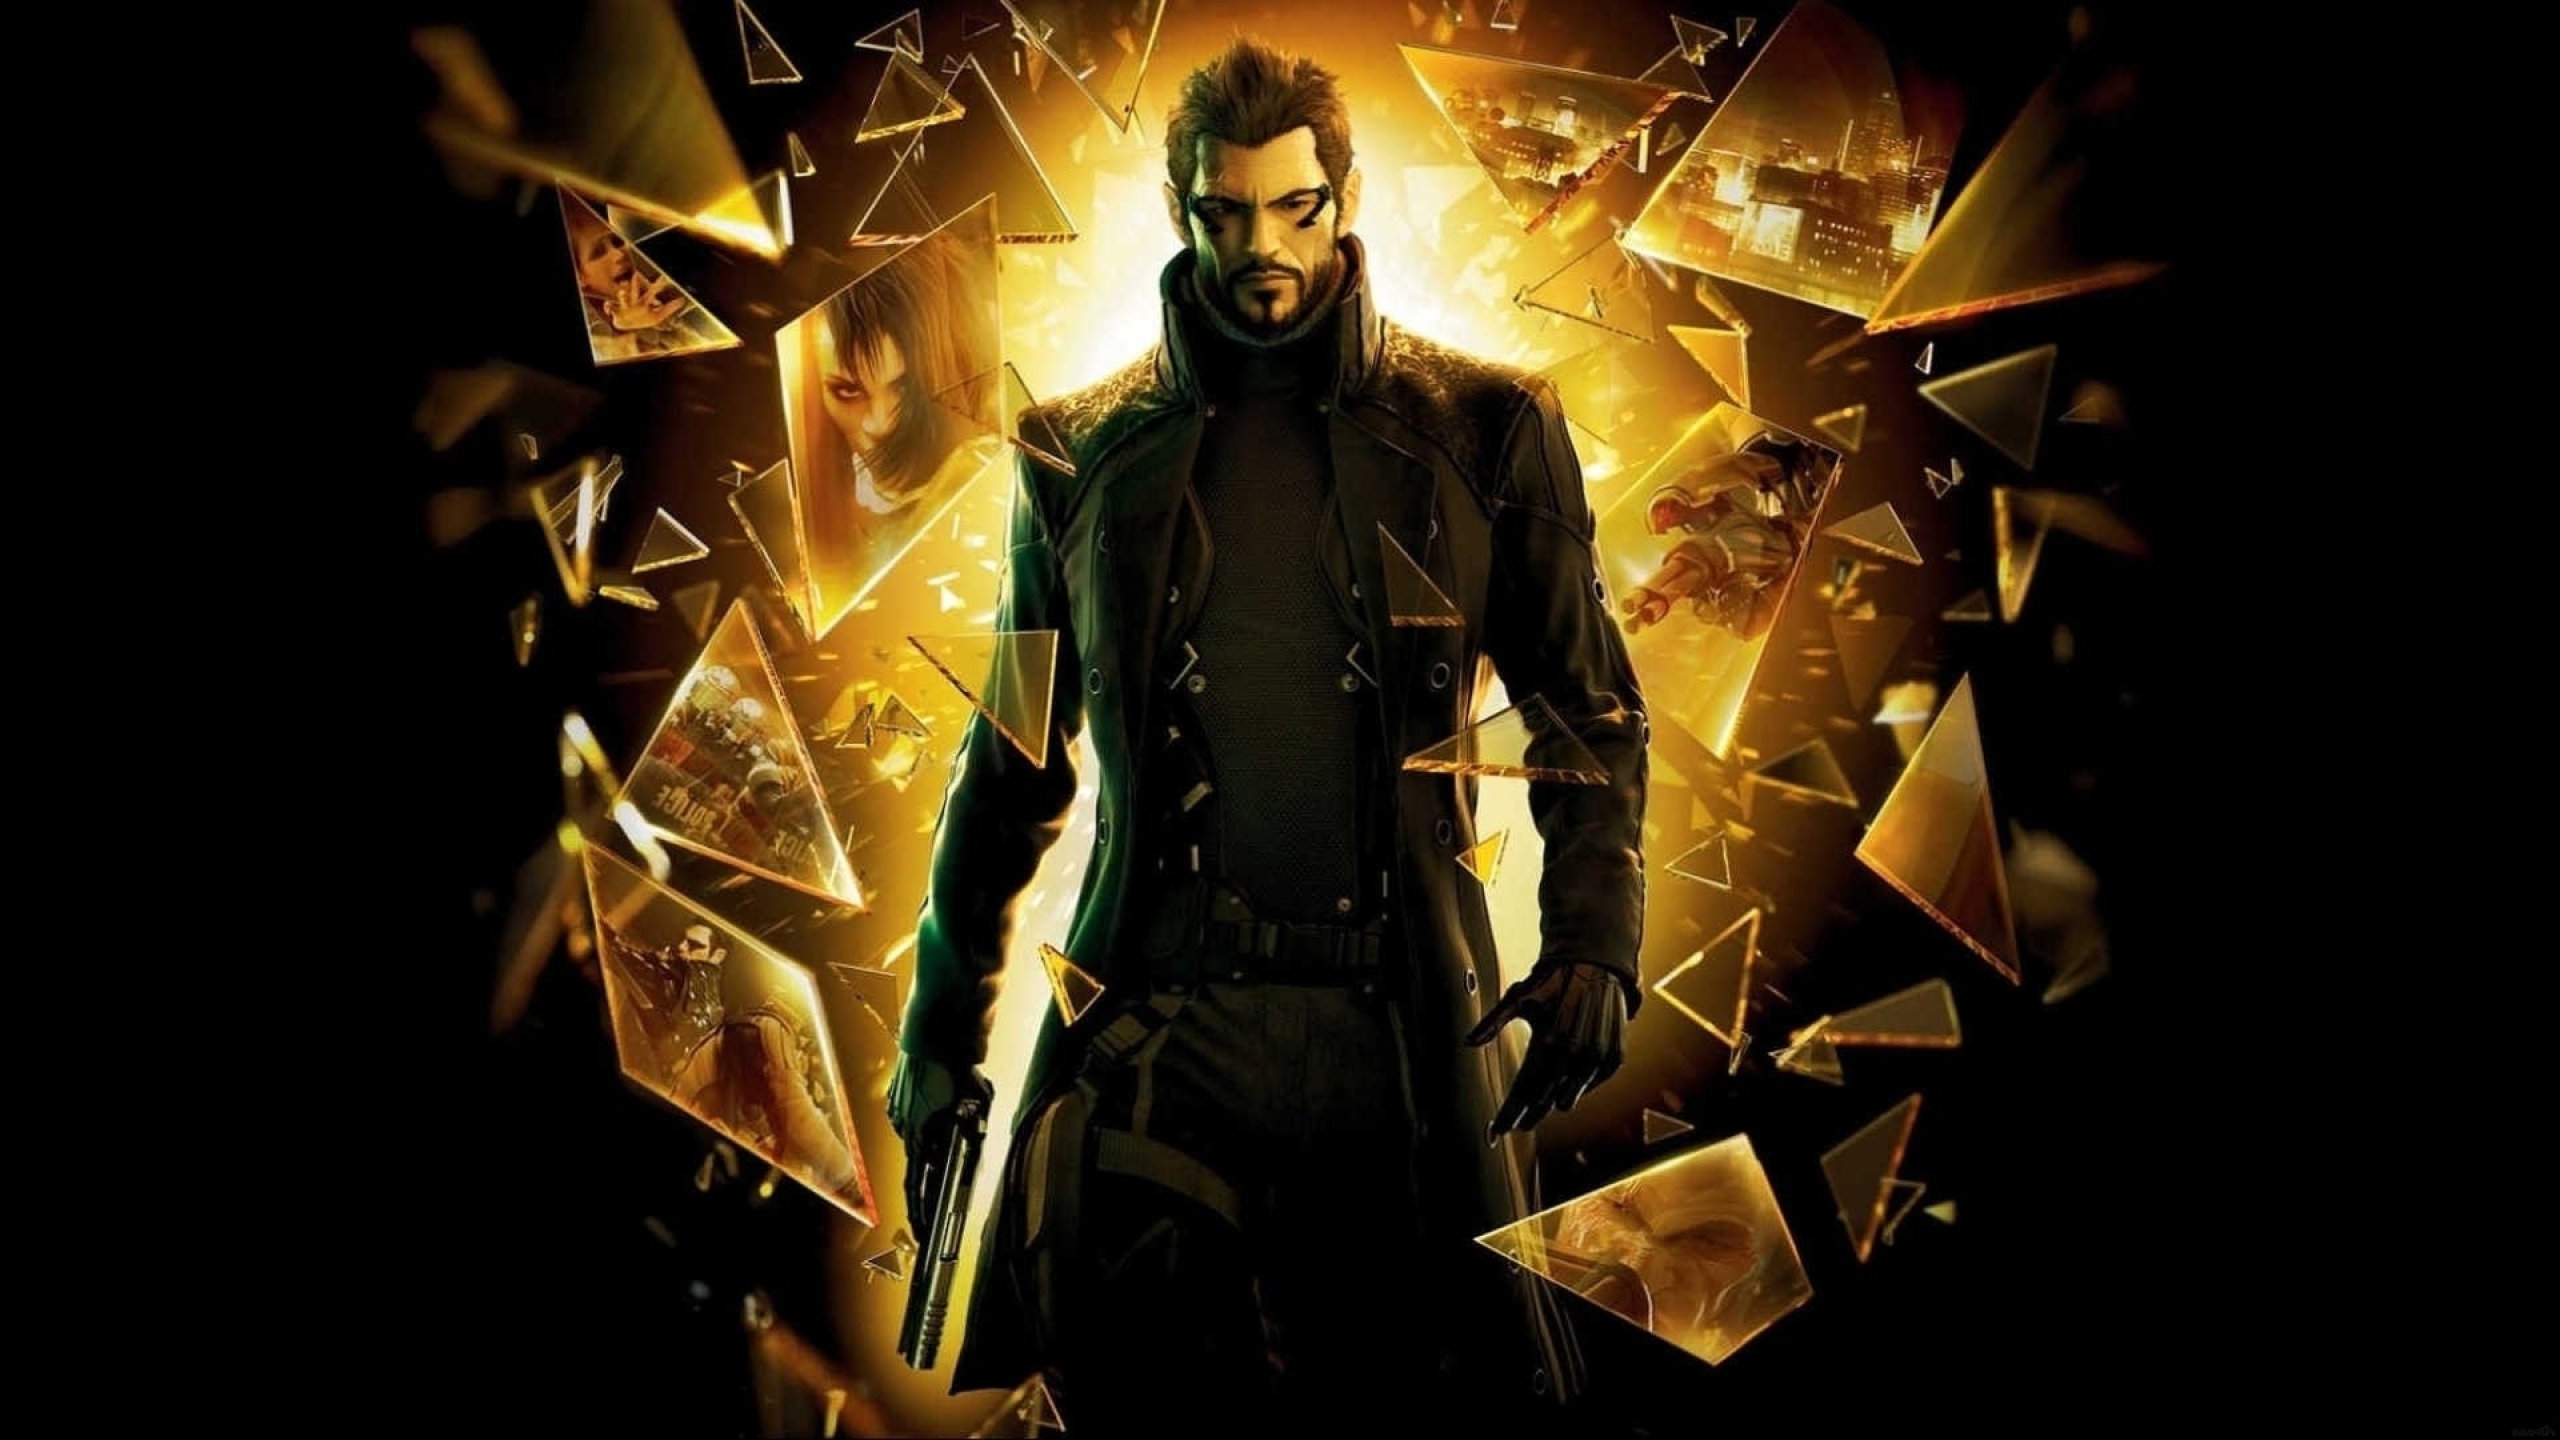 Nice wallpapers Deus Ex: Human Revolution 2560x1440px